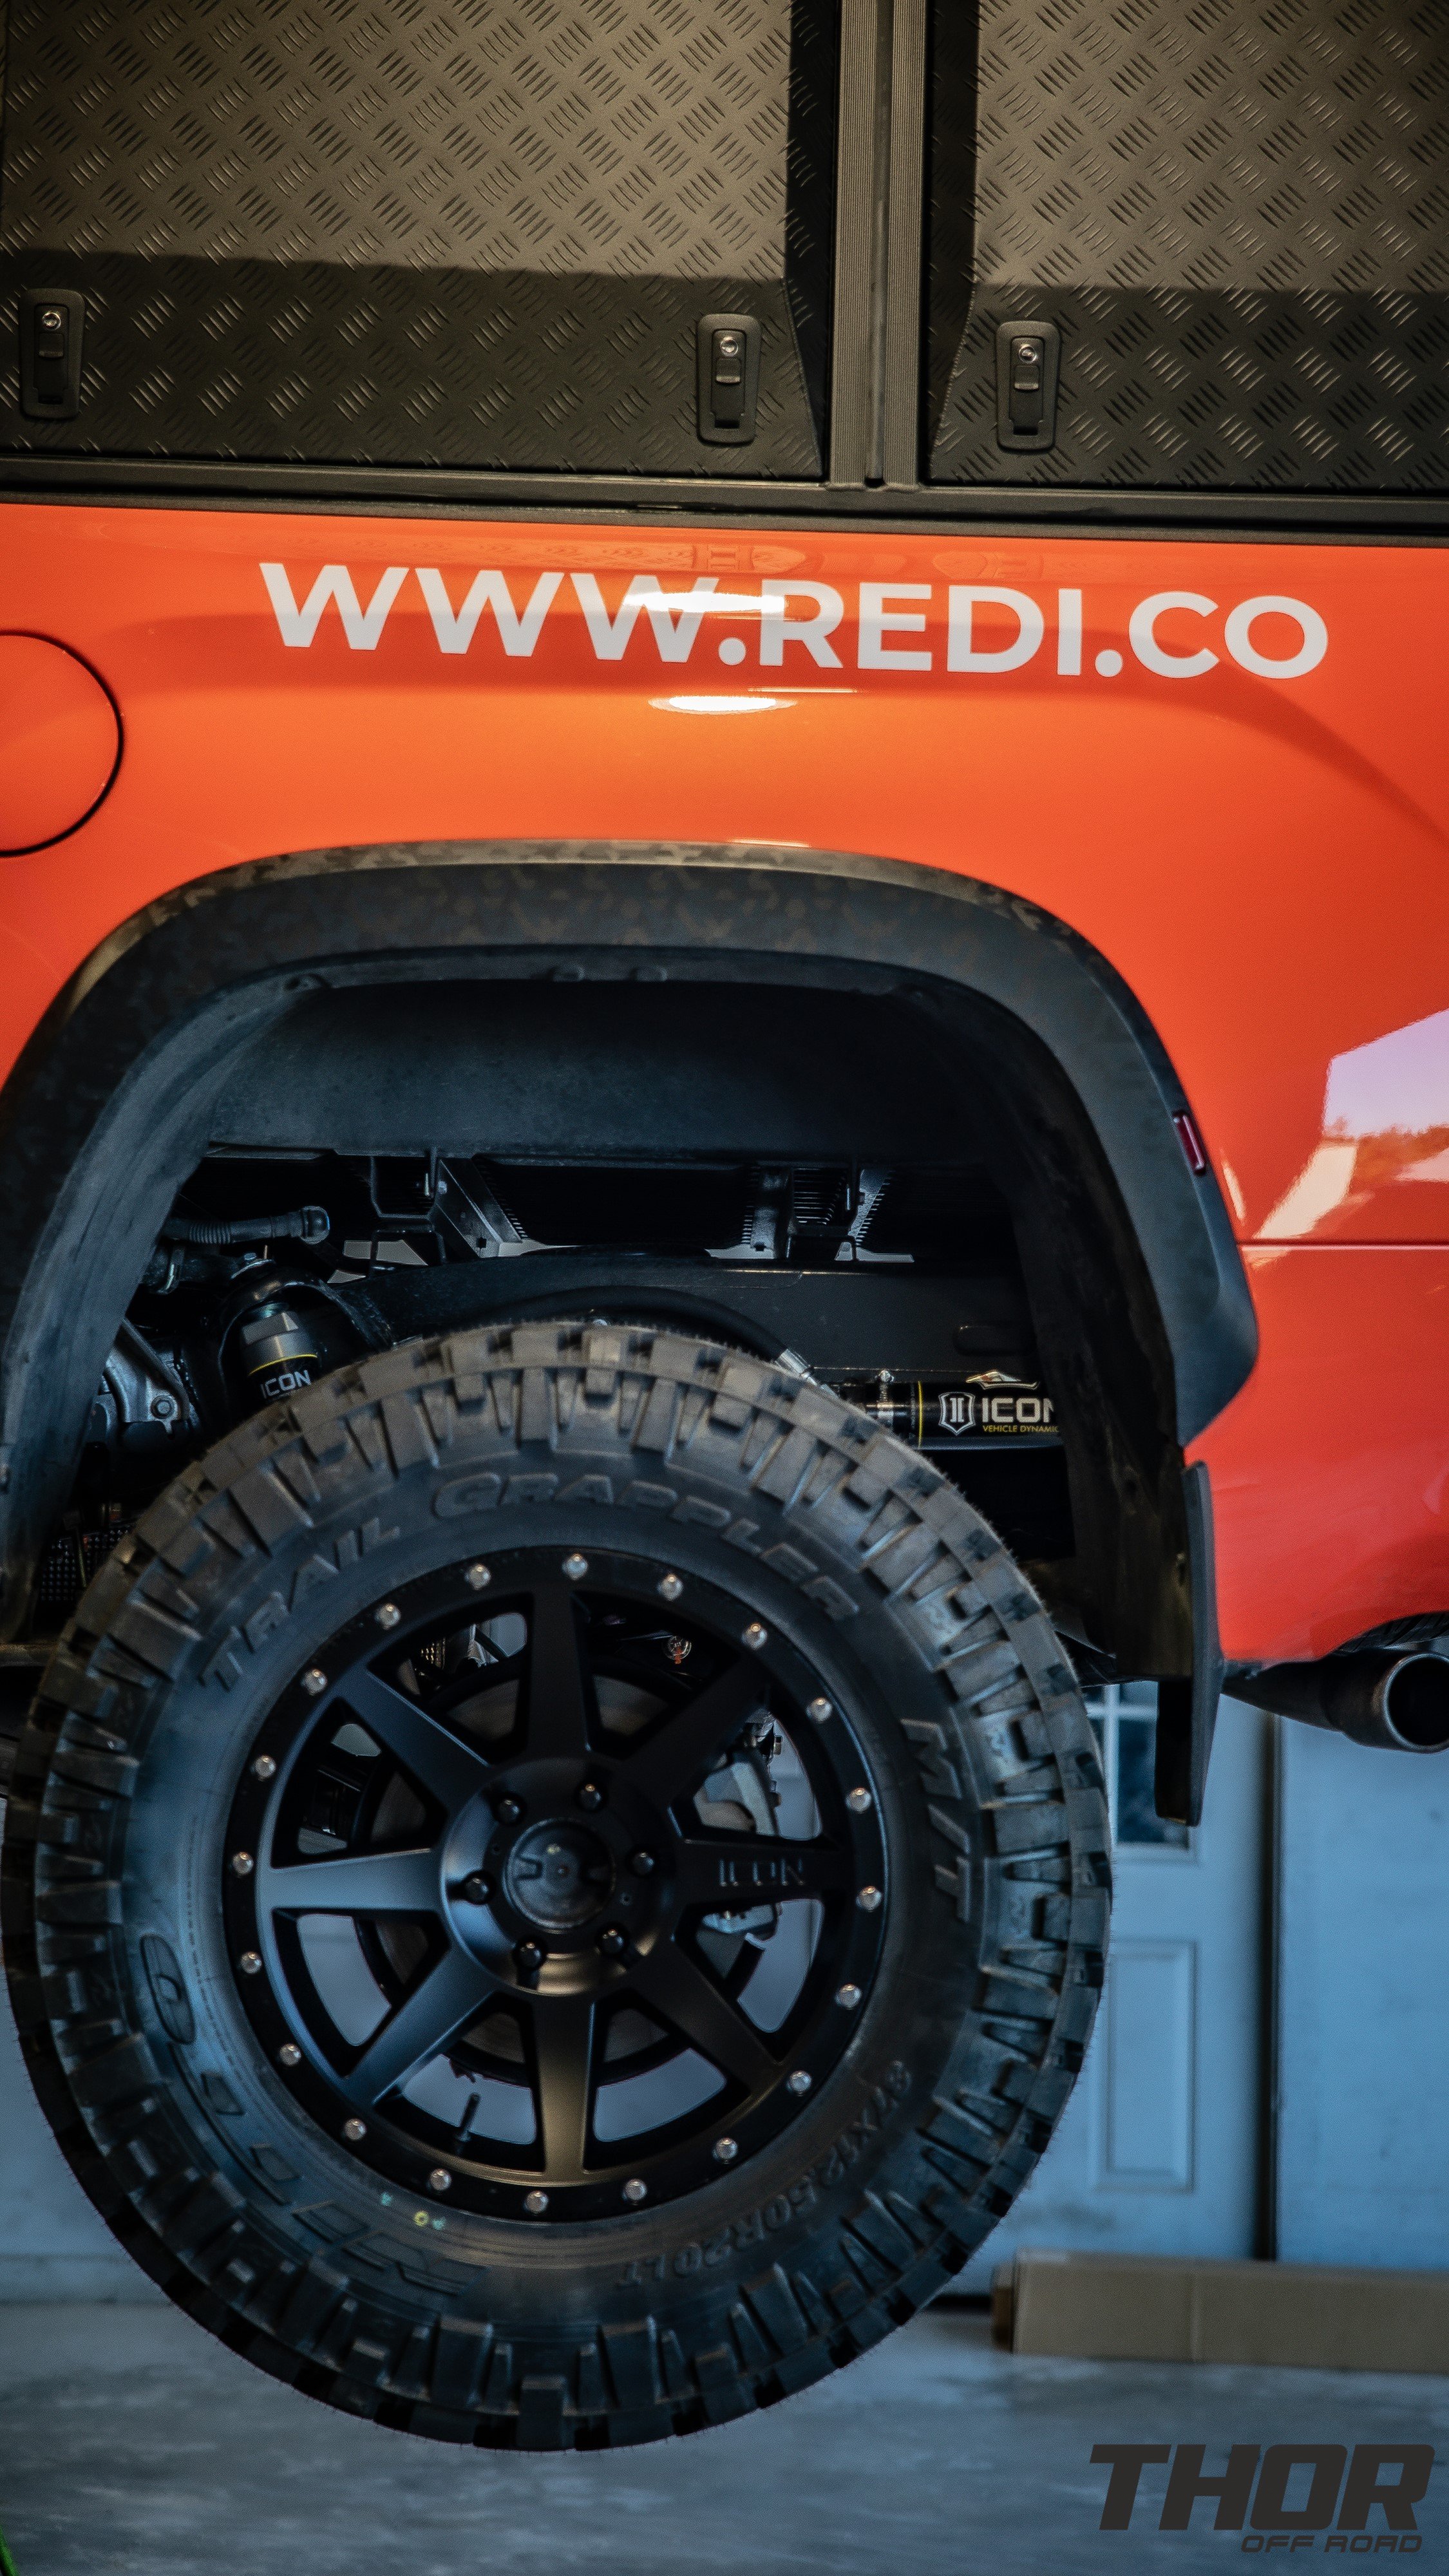 2023 Toyota Tundra TRD Pro in Solar Octane with Icon 6" Stage 5 Suspension Kit, Icon Rebound 20"x9" Wheels, Nitto Trail Grappler 37x12.50R20 Tires